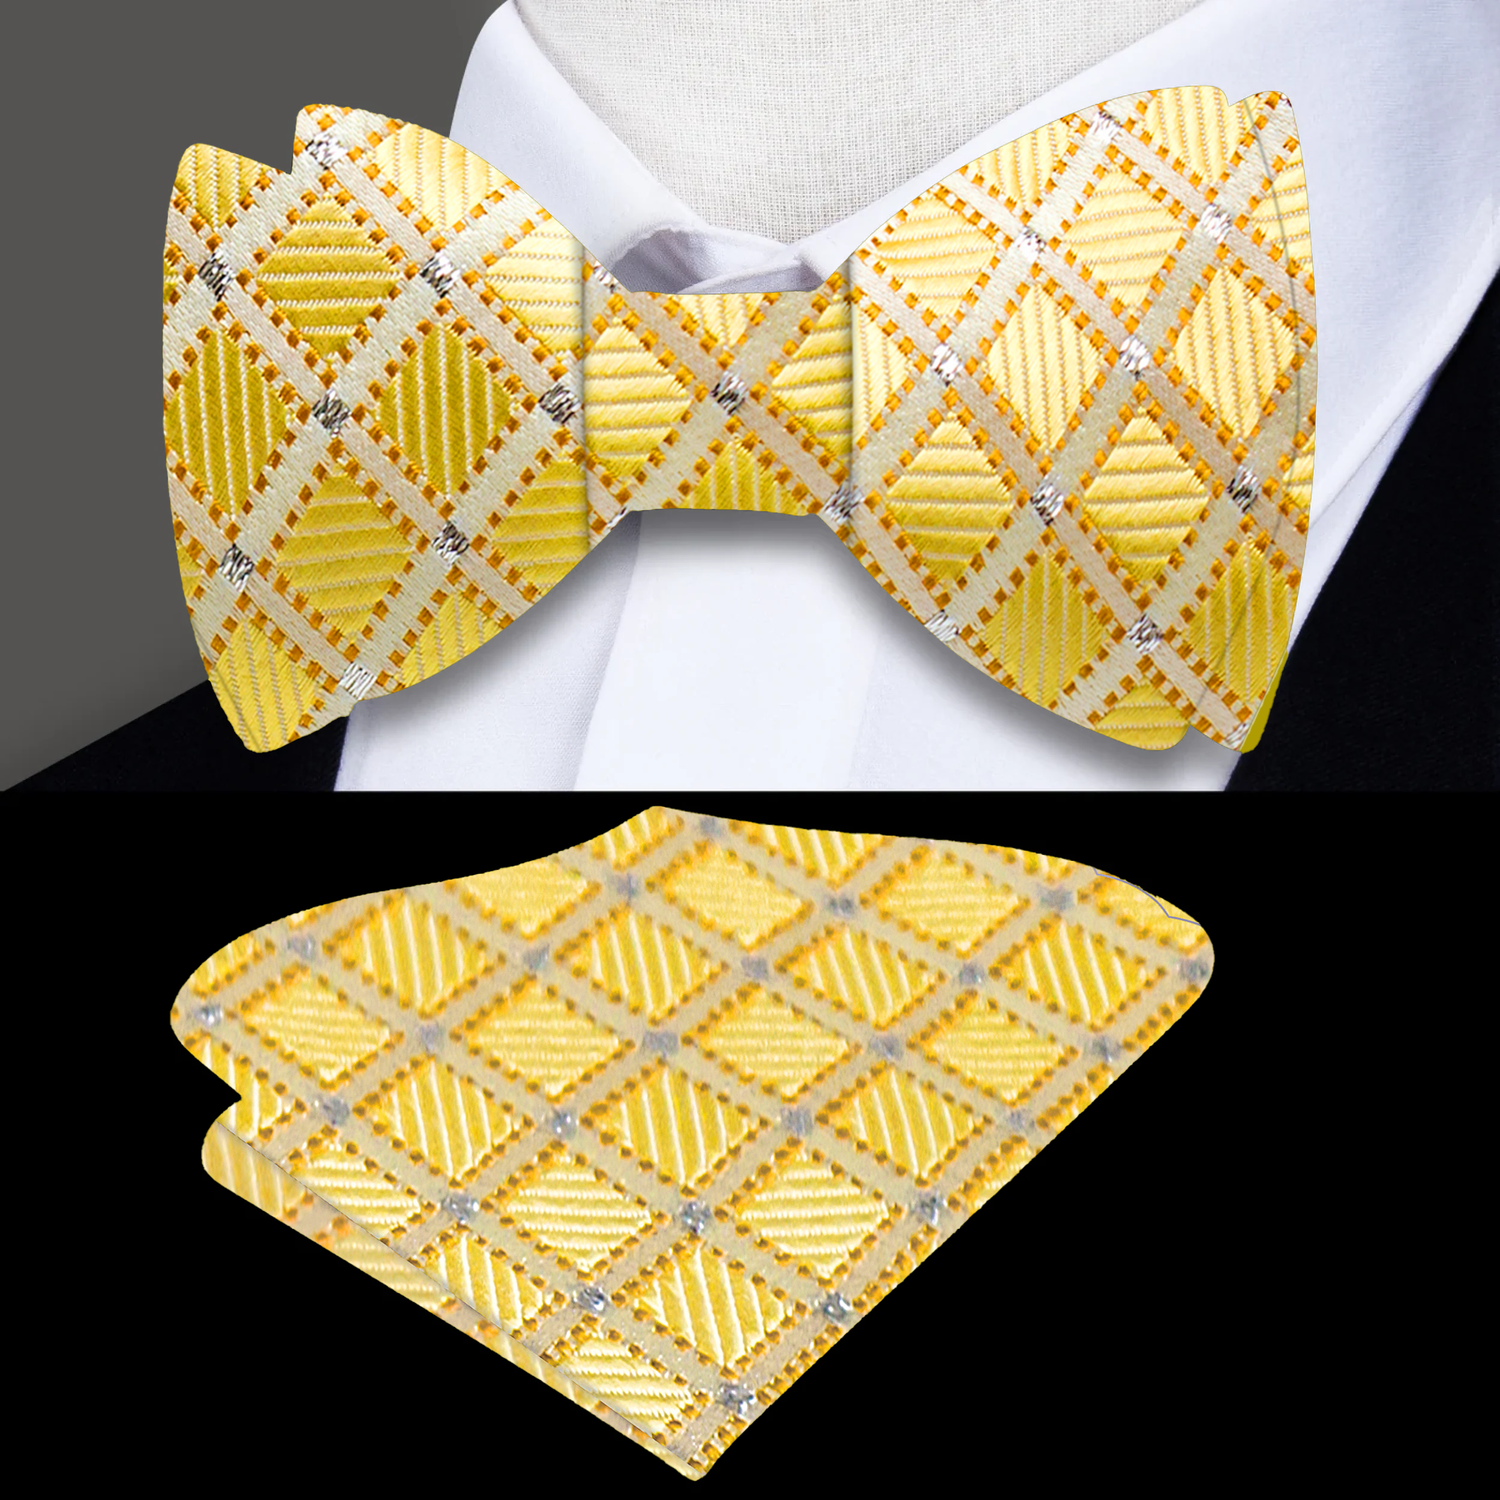 Main: A Gold, With Diamond Looking Checks Geometric Diamonds Pattern Silk Self Tie Bow Tie, Matching Pocket Square